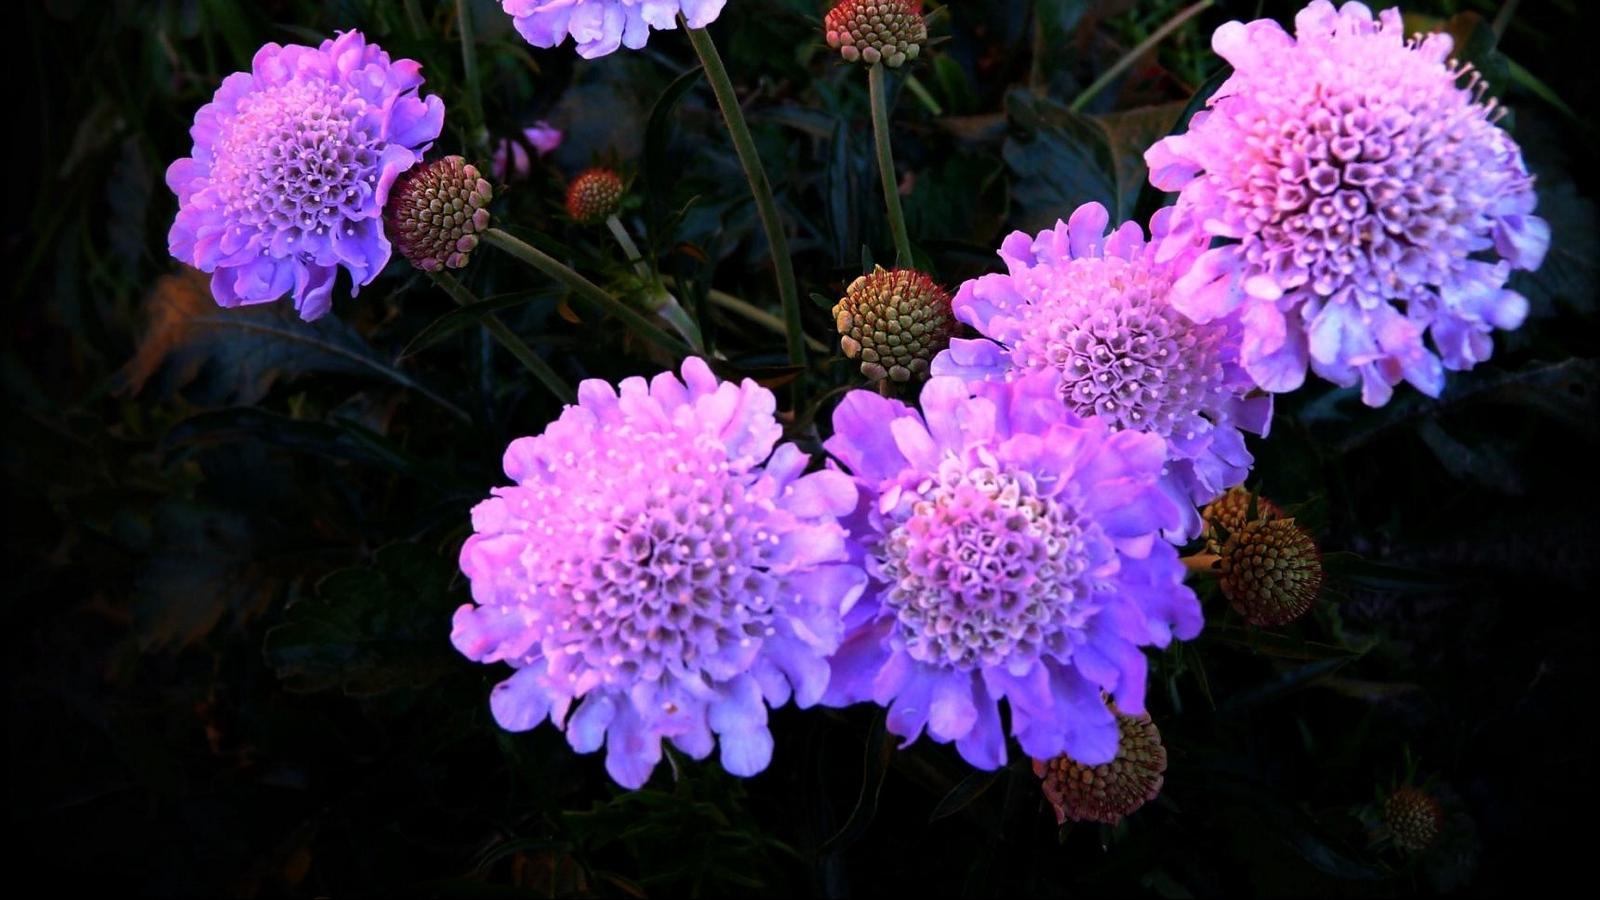 Download wallpaper 1600x900 flowers, purple, night, flowerbed